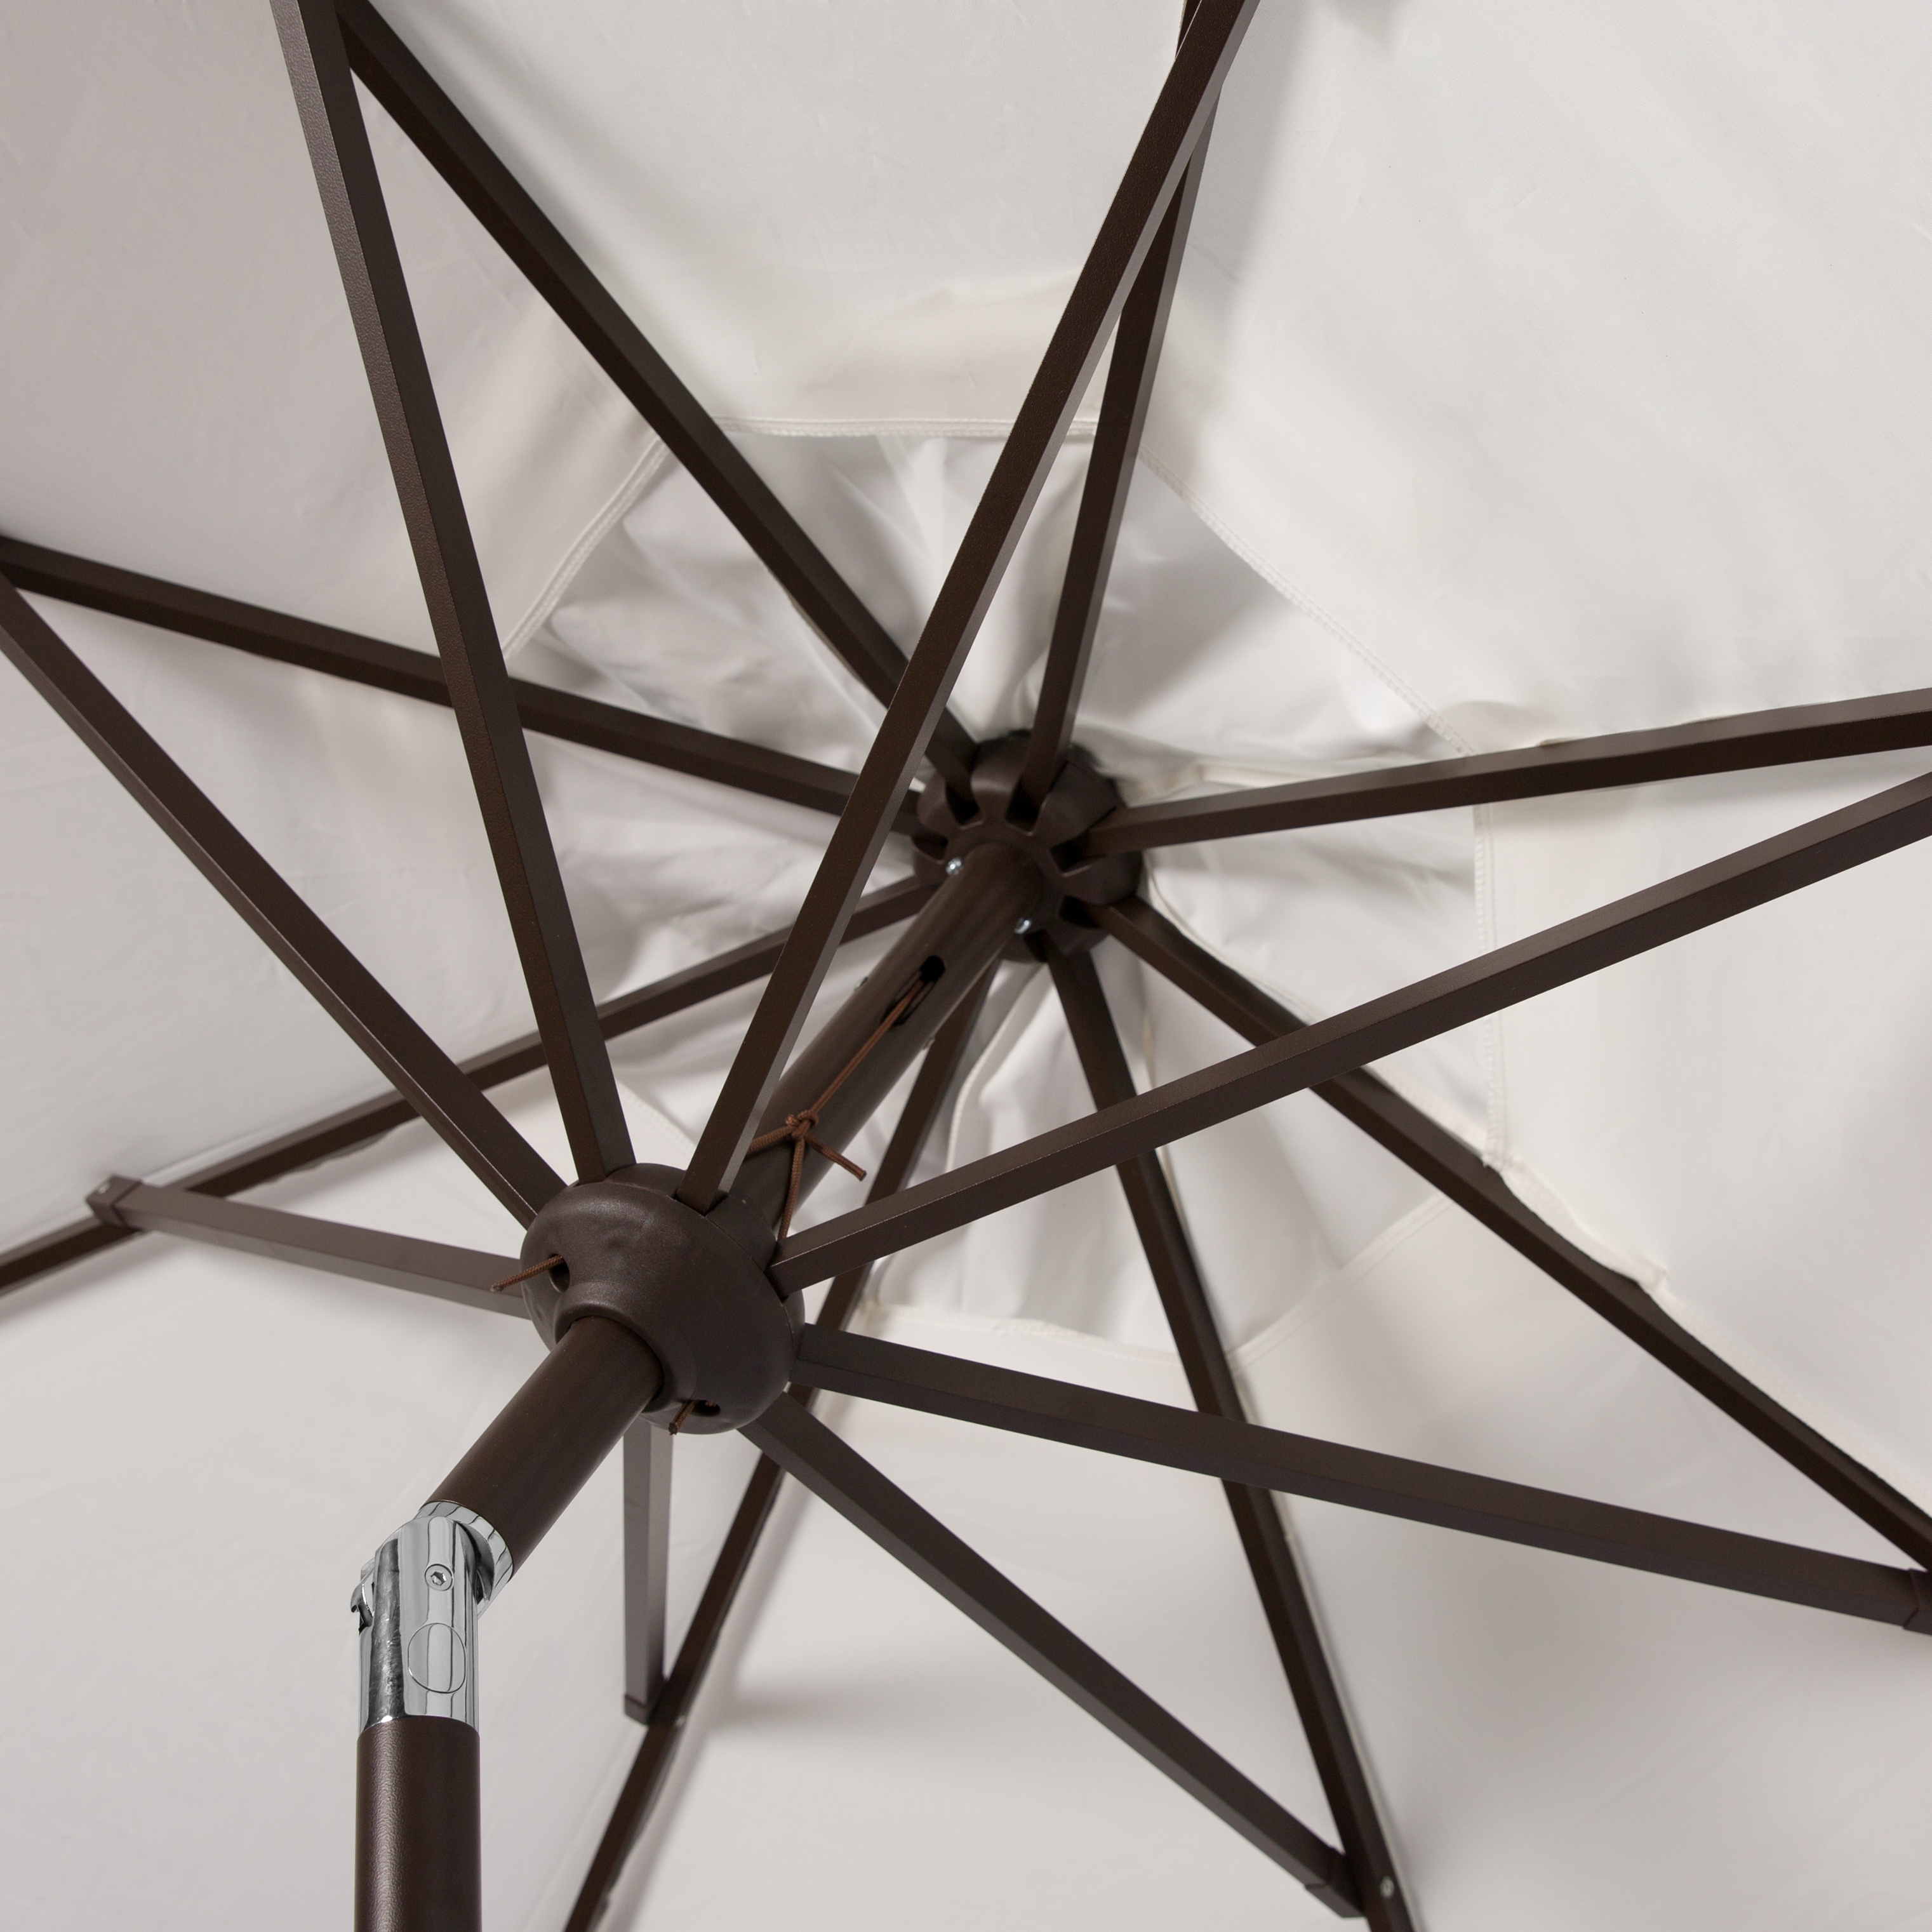 Milan Fringe 9Ft Crank Outdoor Push Button Tilt Umbrella - White - Arlo Home - Image 2